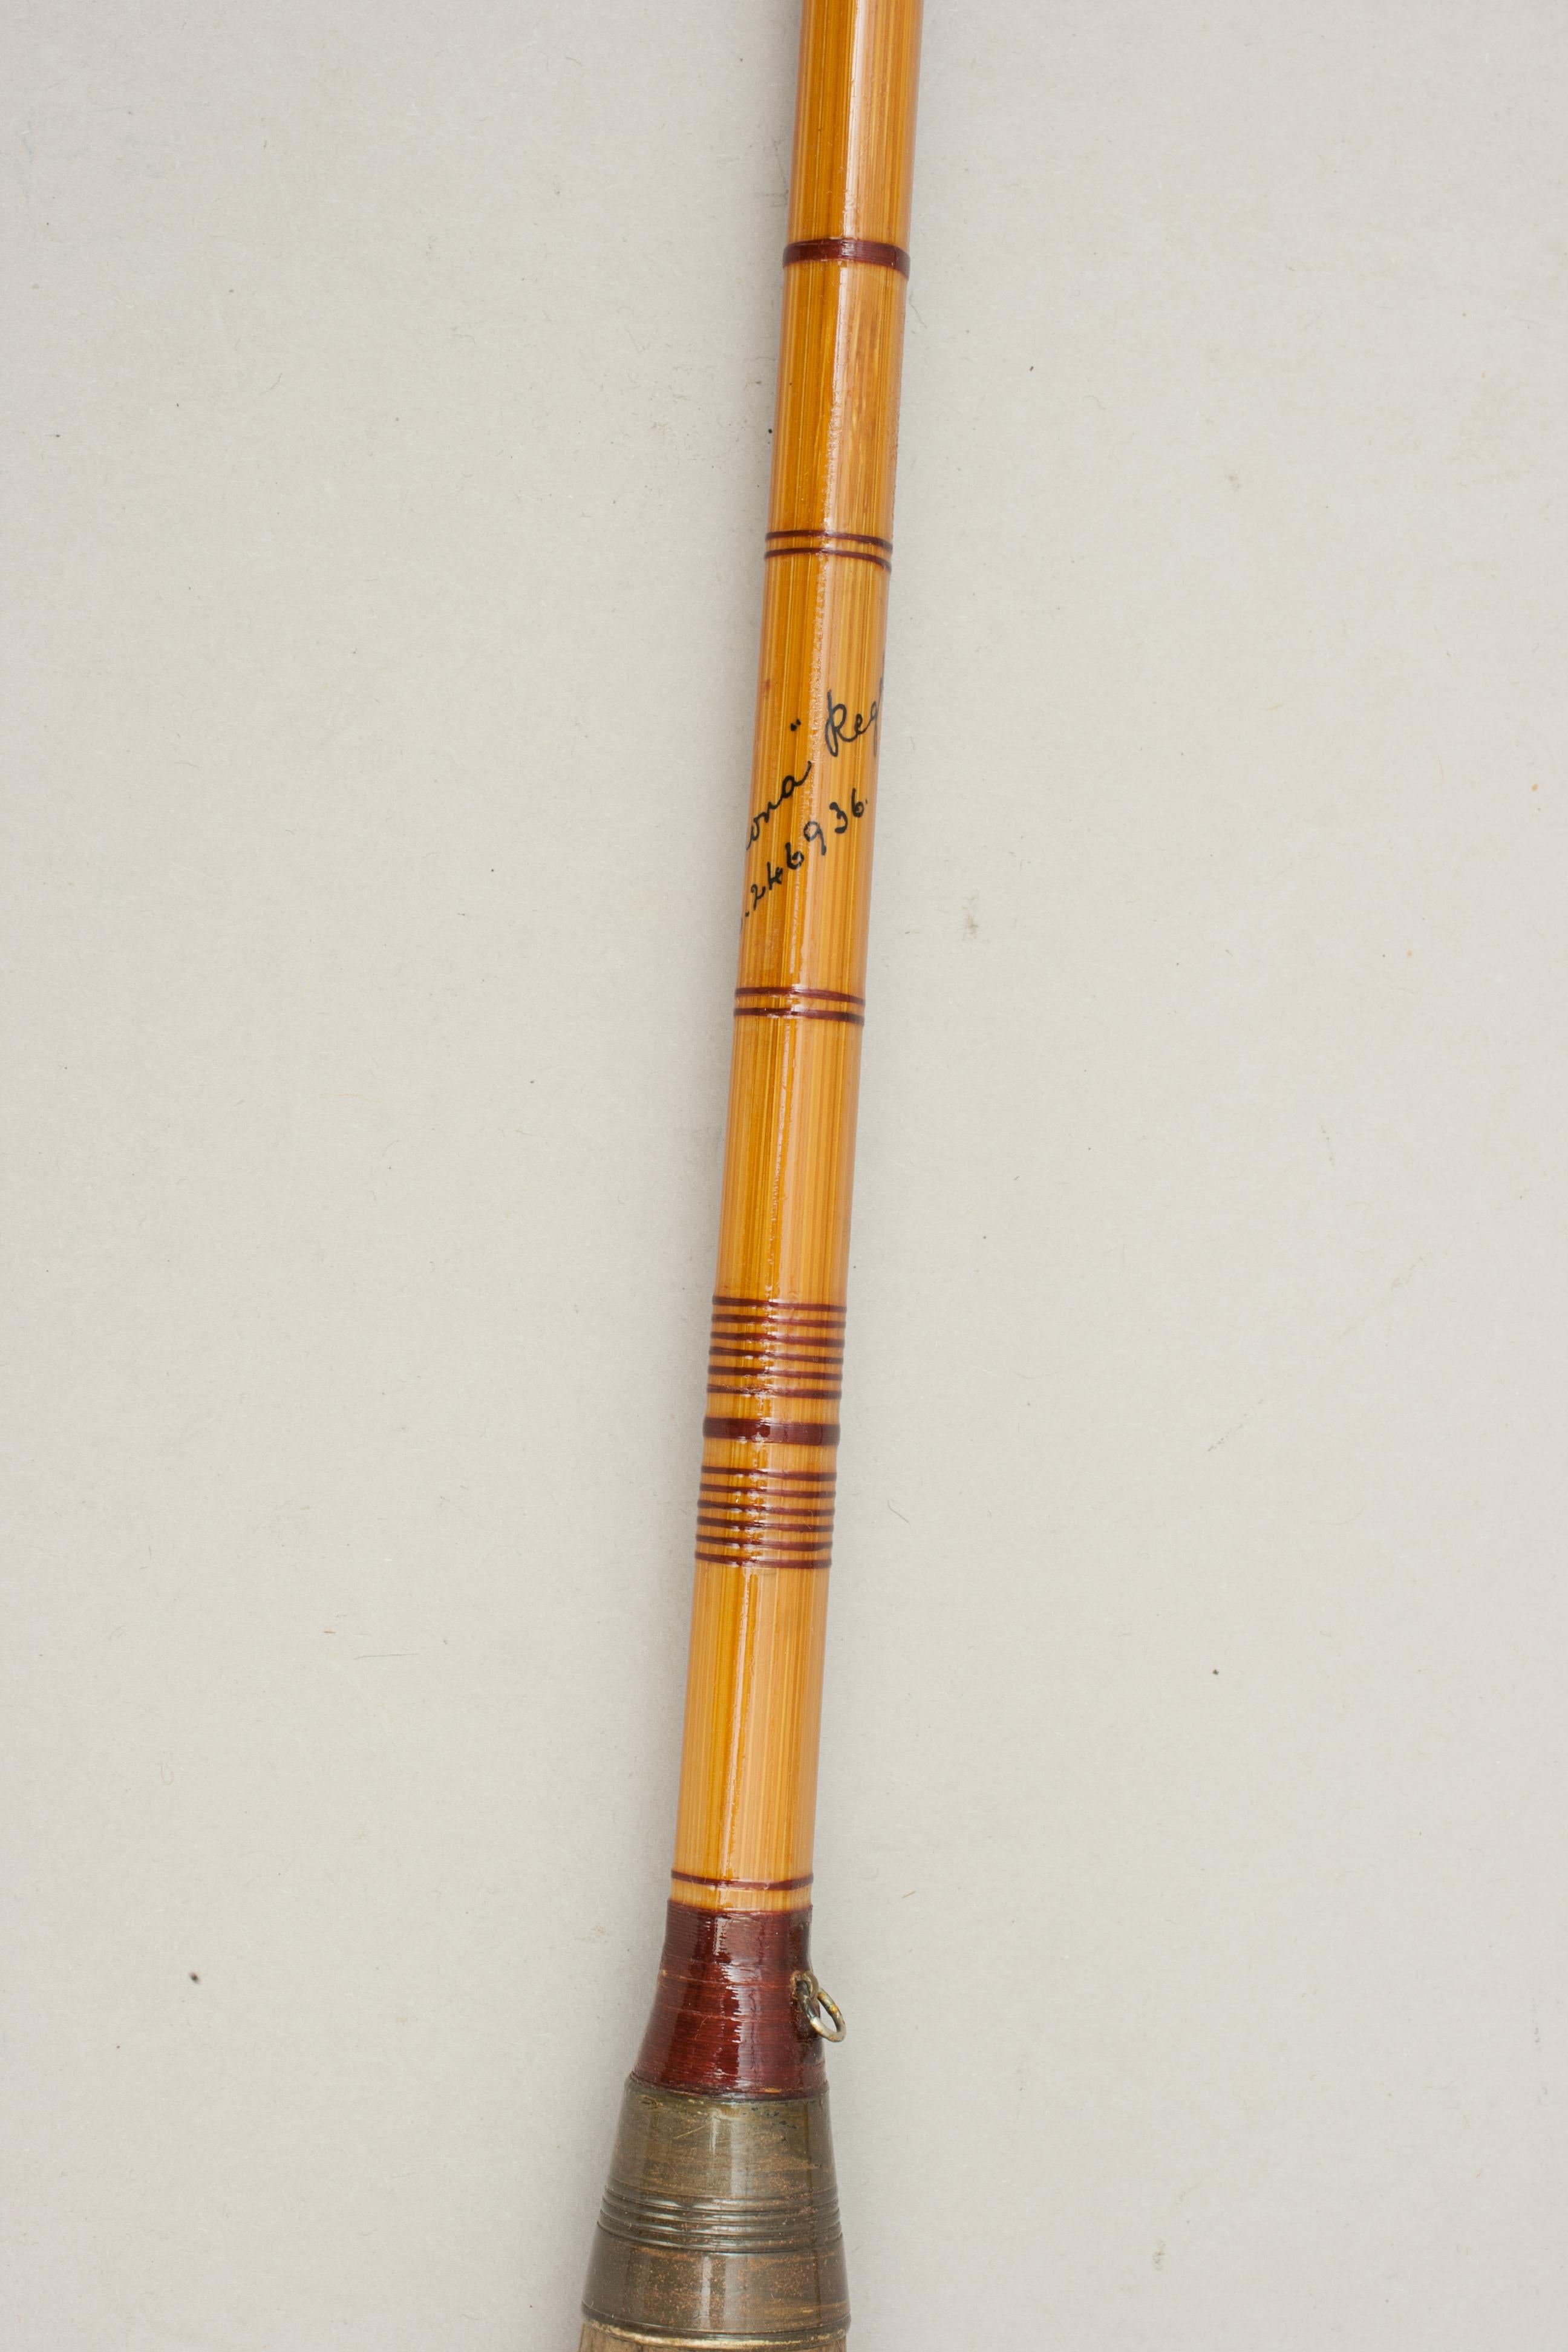 split cane fly fishing rod. Hardy Hardy Palakona "The Perfection" 9' 2 piece 